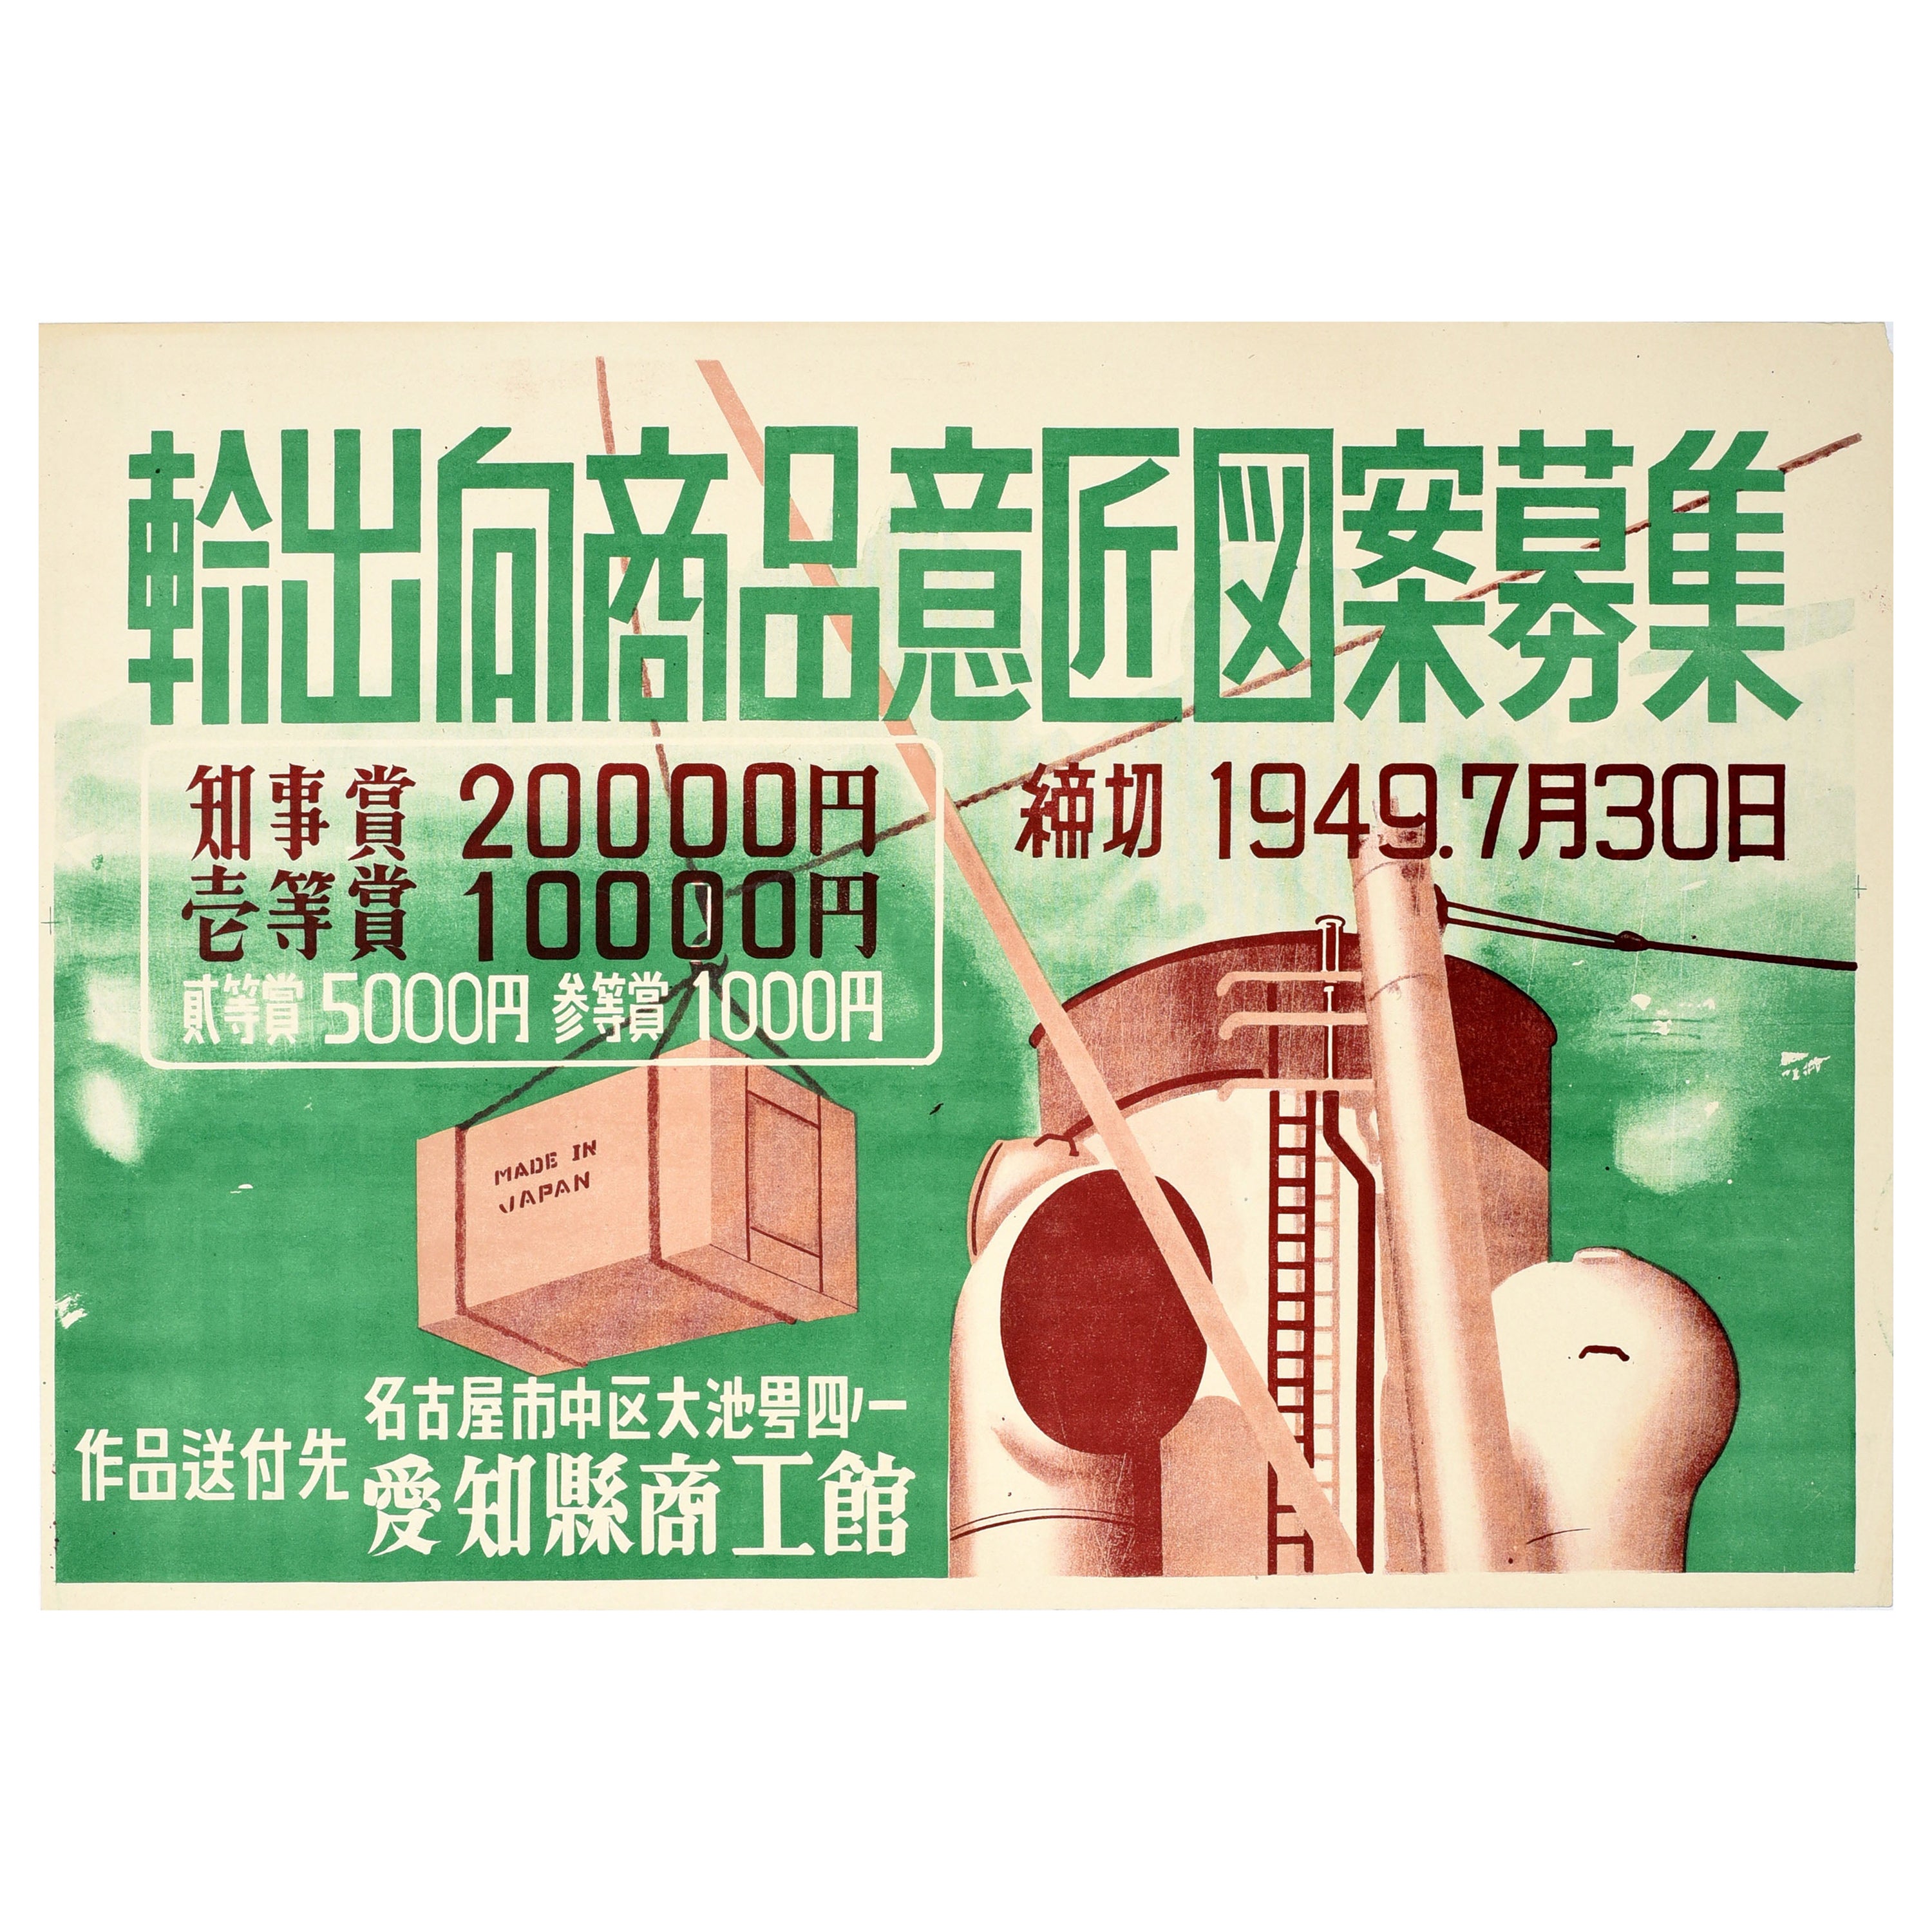 Original Vintage Recruitment Poster Product Design Japan Foreign Export Industry For Sale